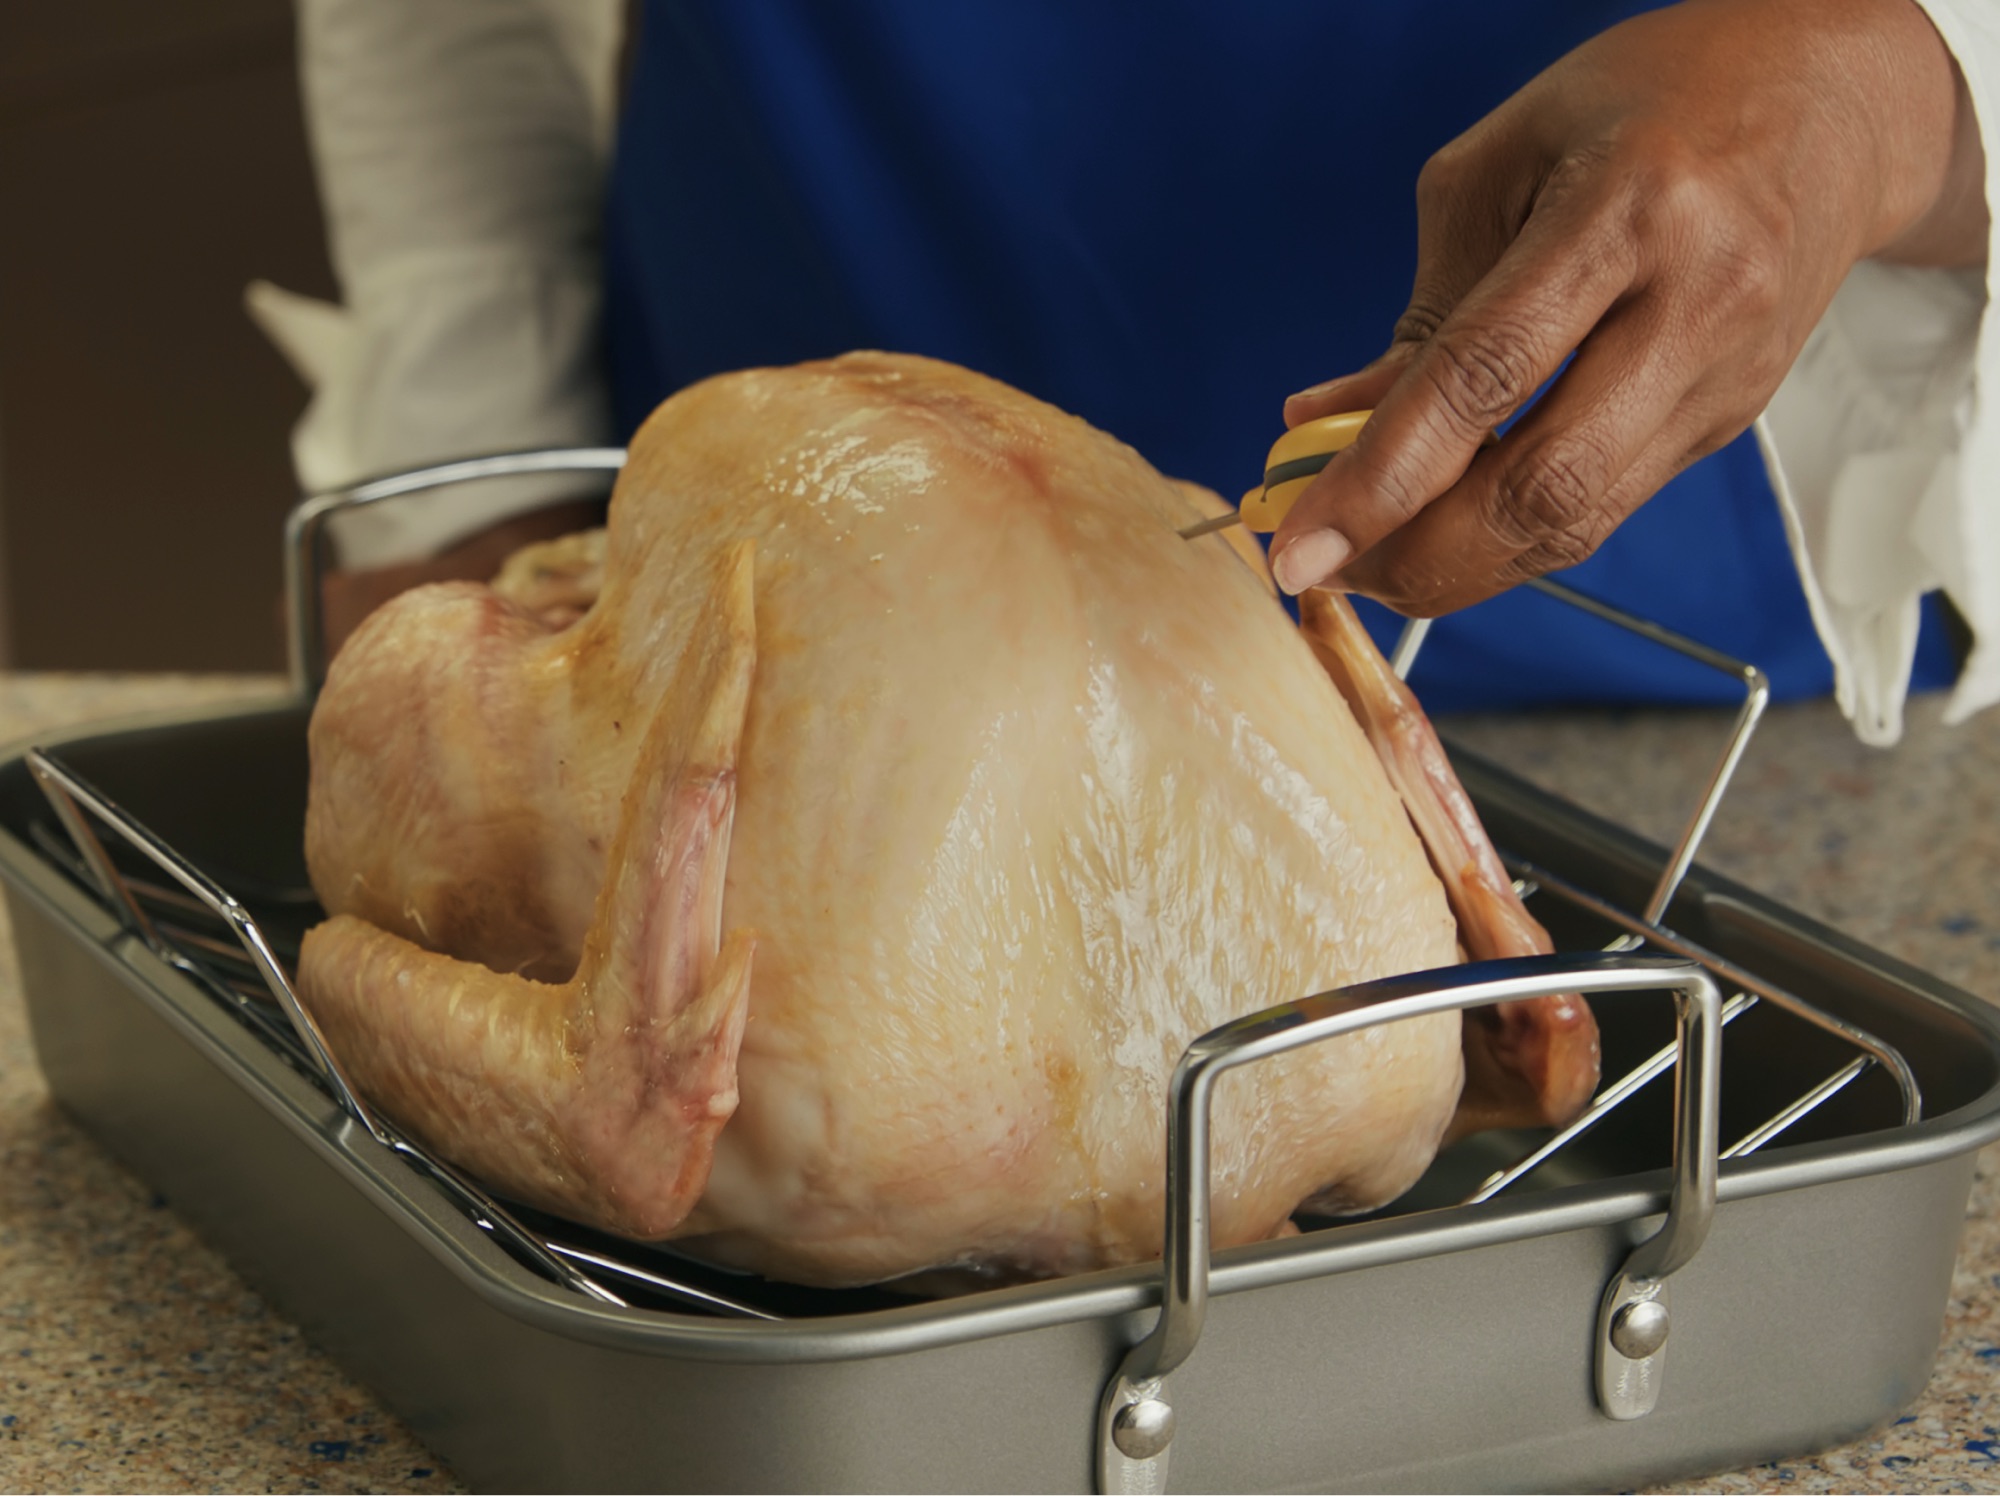 Butterball Ready to Roast Frozen Whole Turkey, 12 lbs - Harris Teeter